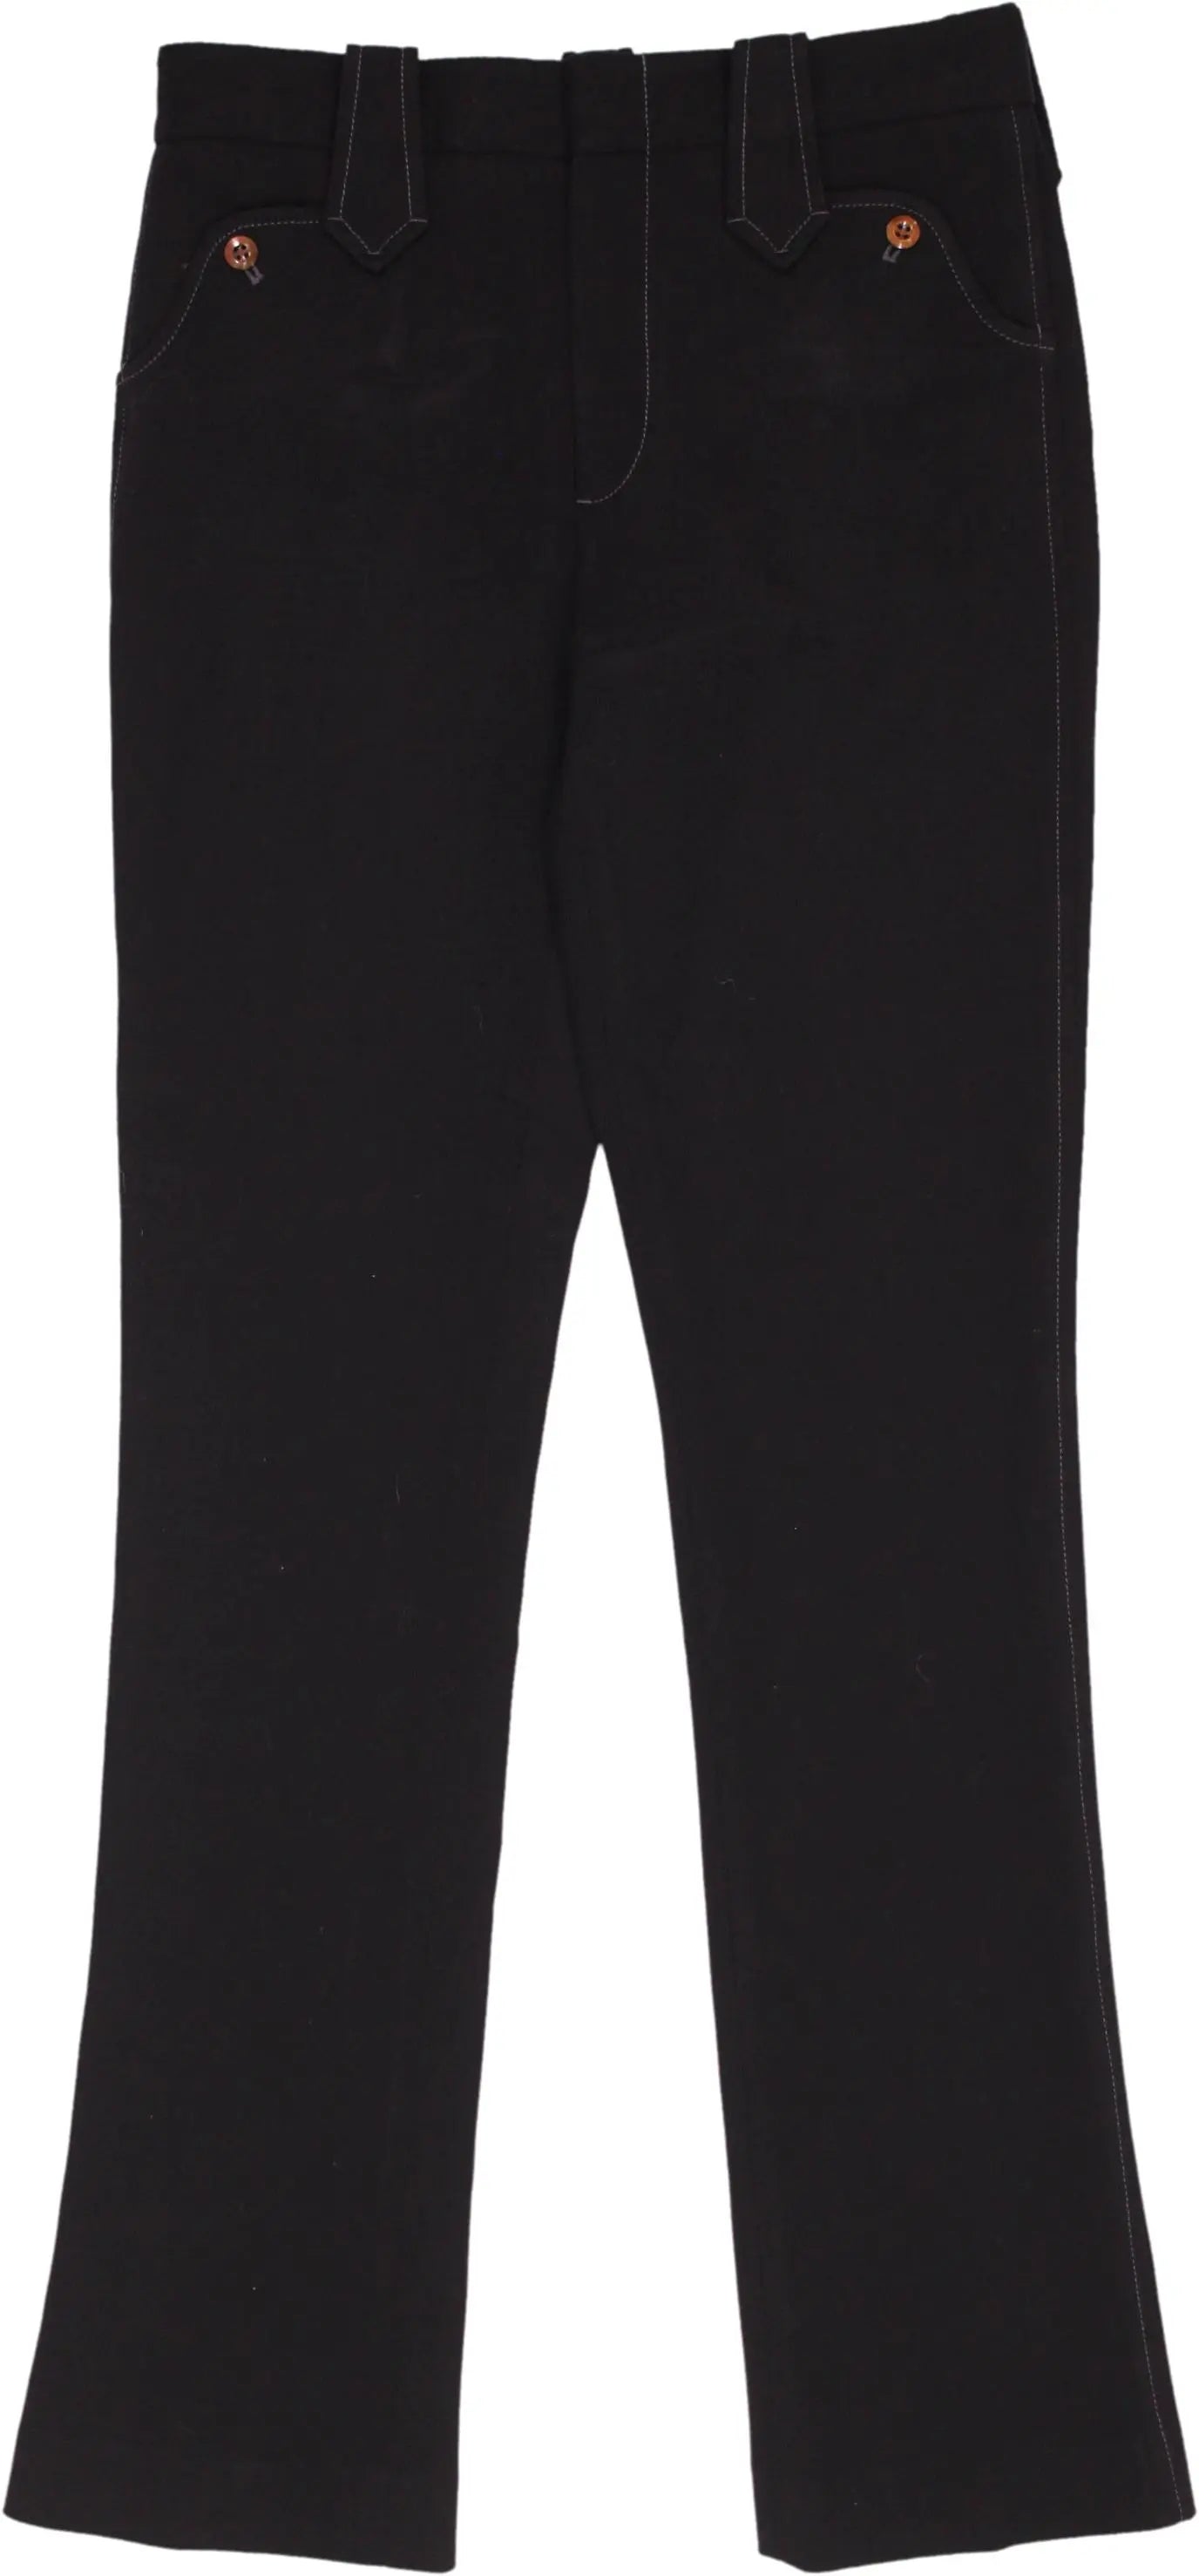 Ralph Lauren - Wool Black Pants by Ralph Lauren- ThriftTale.com - Vintage and second handclothing